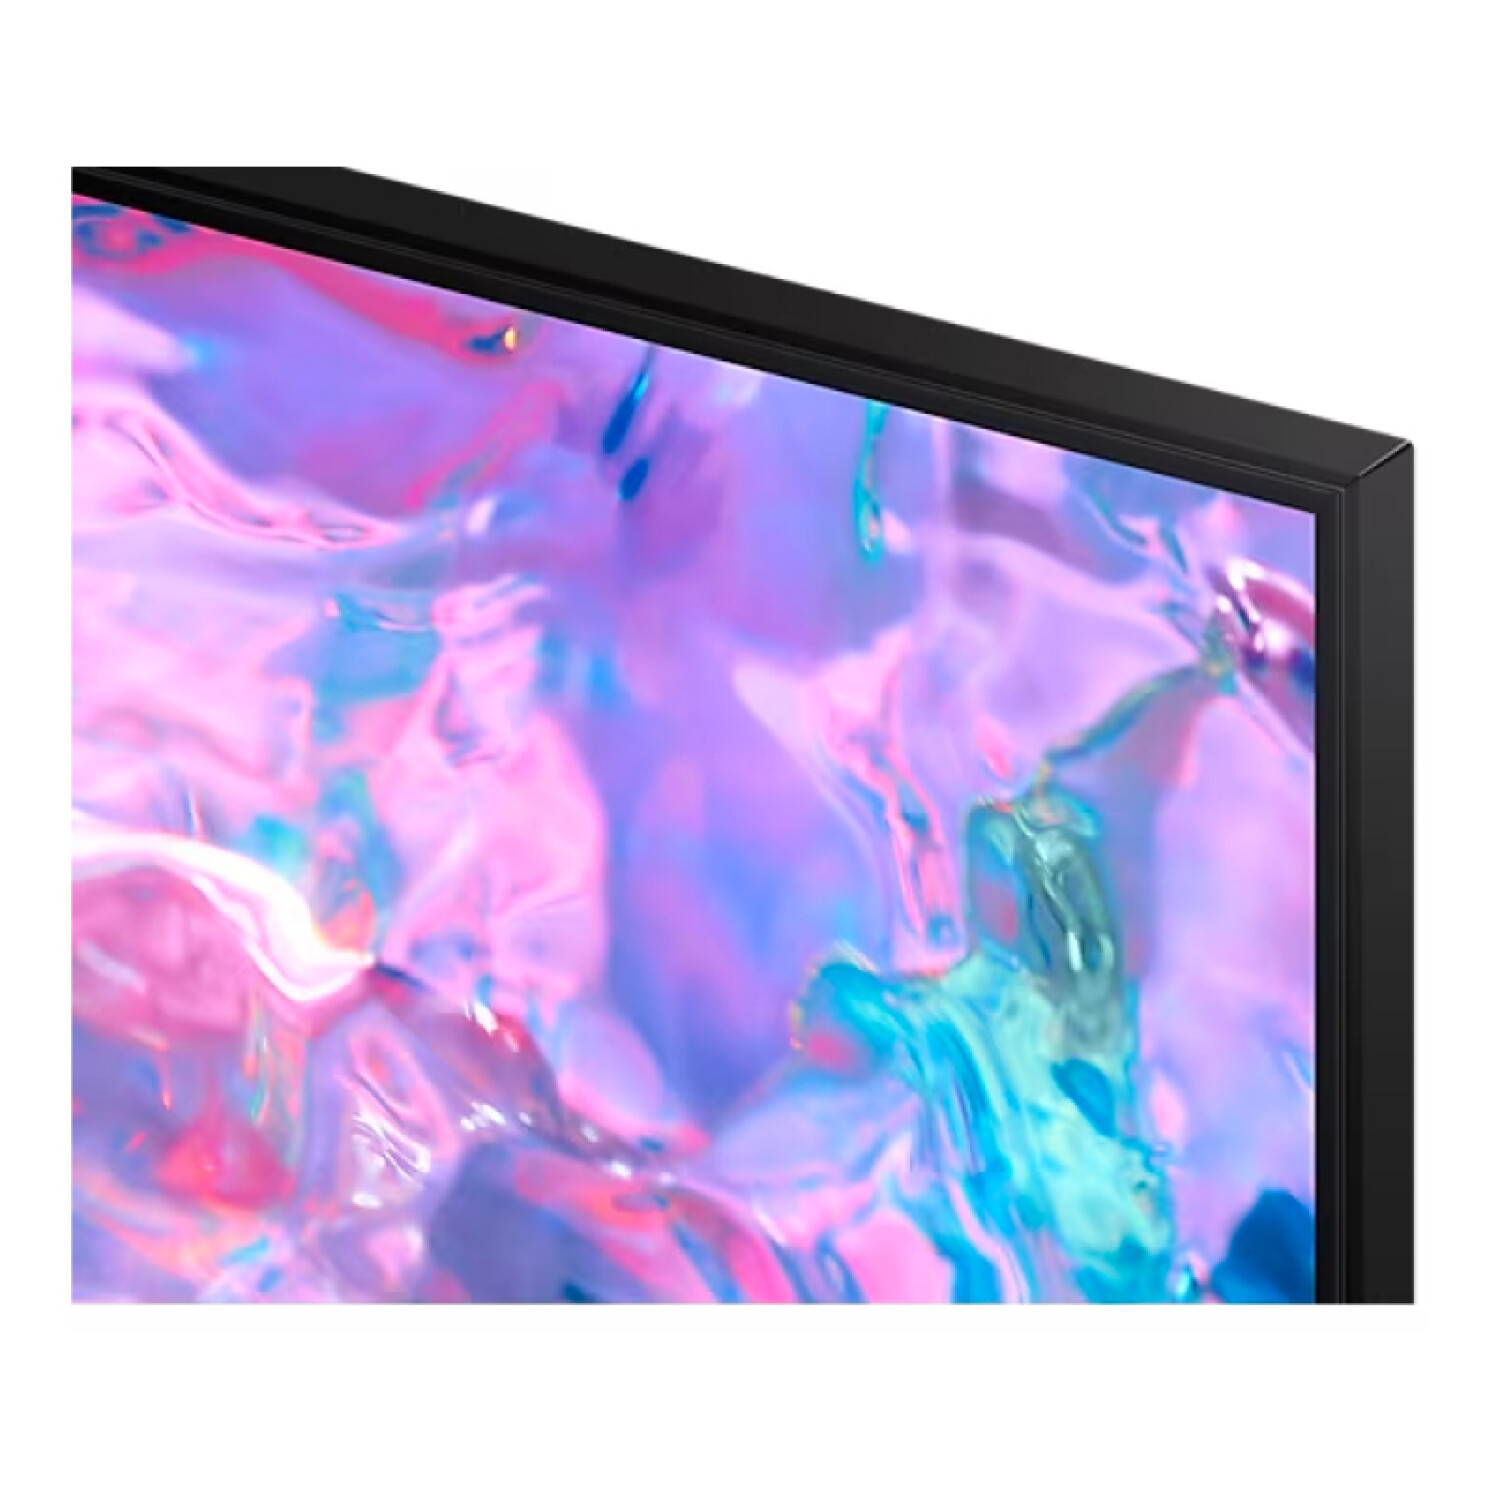  SAMSUNG - Smart TV de 85 pulgadas 4K UHD TU7000 Cristal UHD,  con Alexa incorporada (UN85TU7000FXZA) : Electrónica